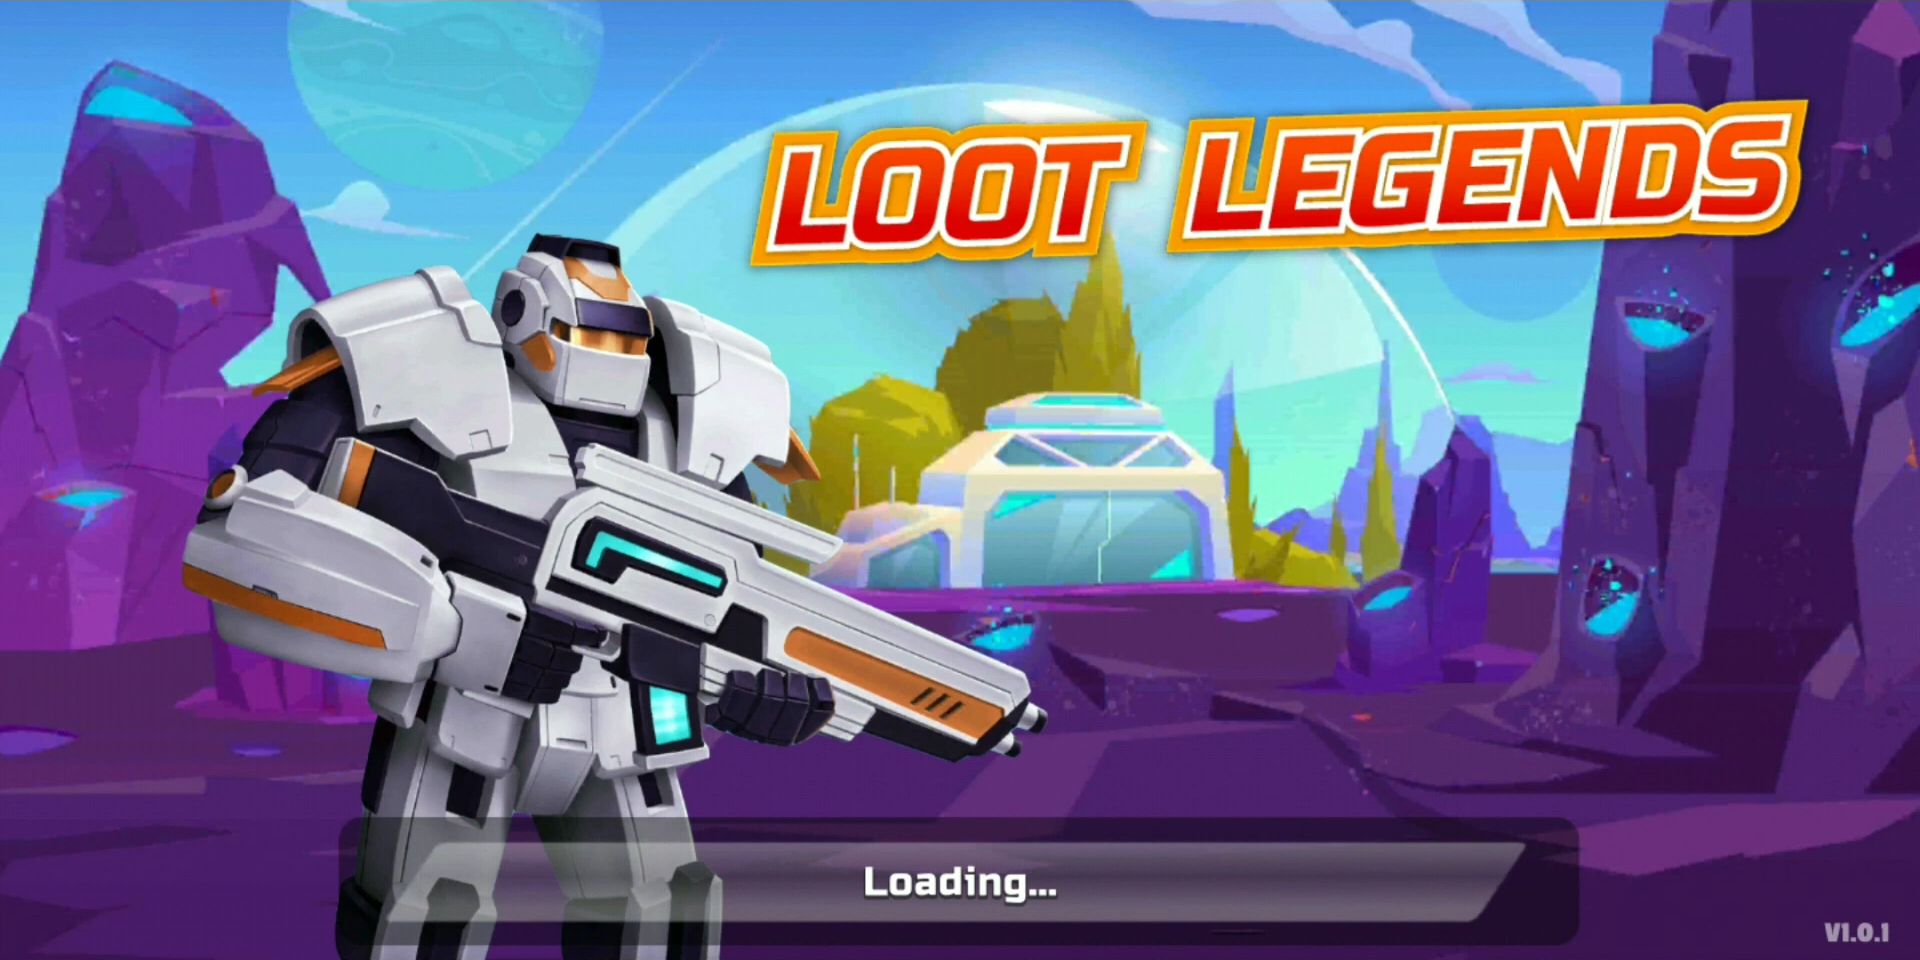 Descargar Loot Legends: Robots vs Aliens gratis para Android.